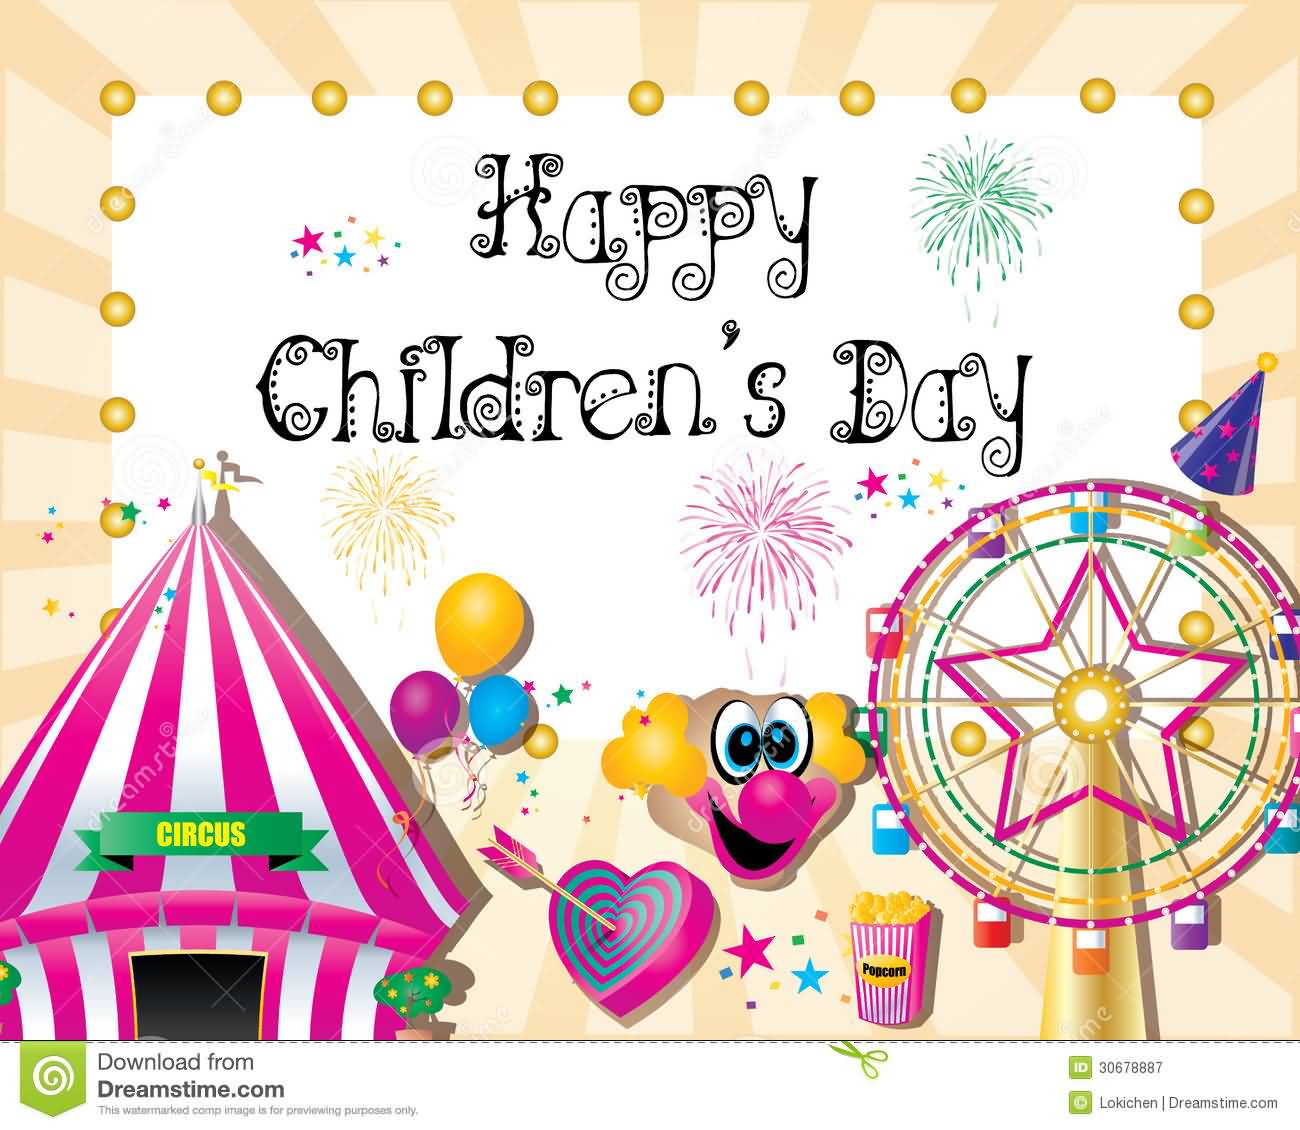 Happy Children's Day 2016 Fair View Greeting Ecard